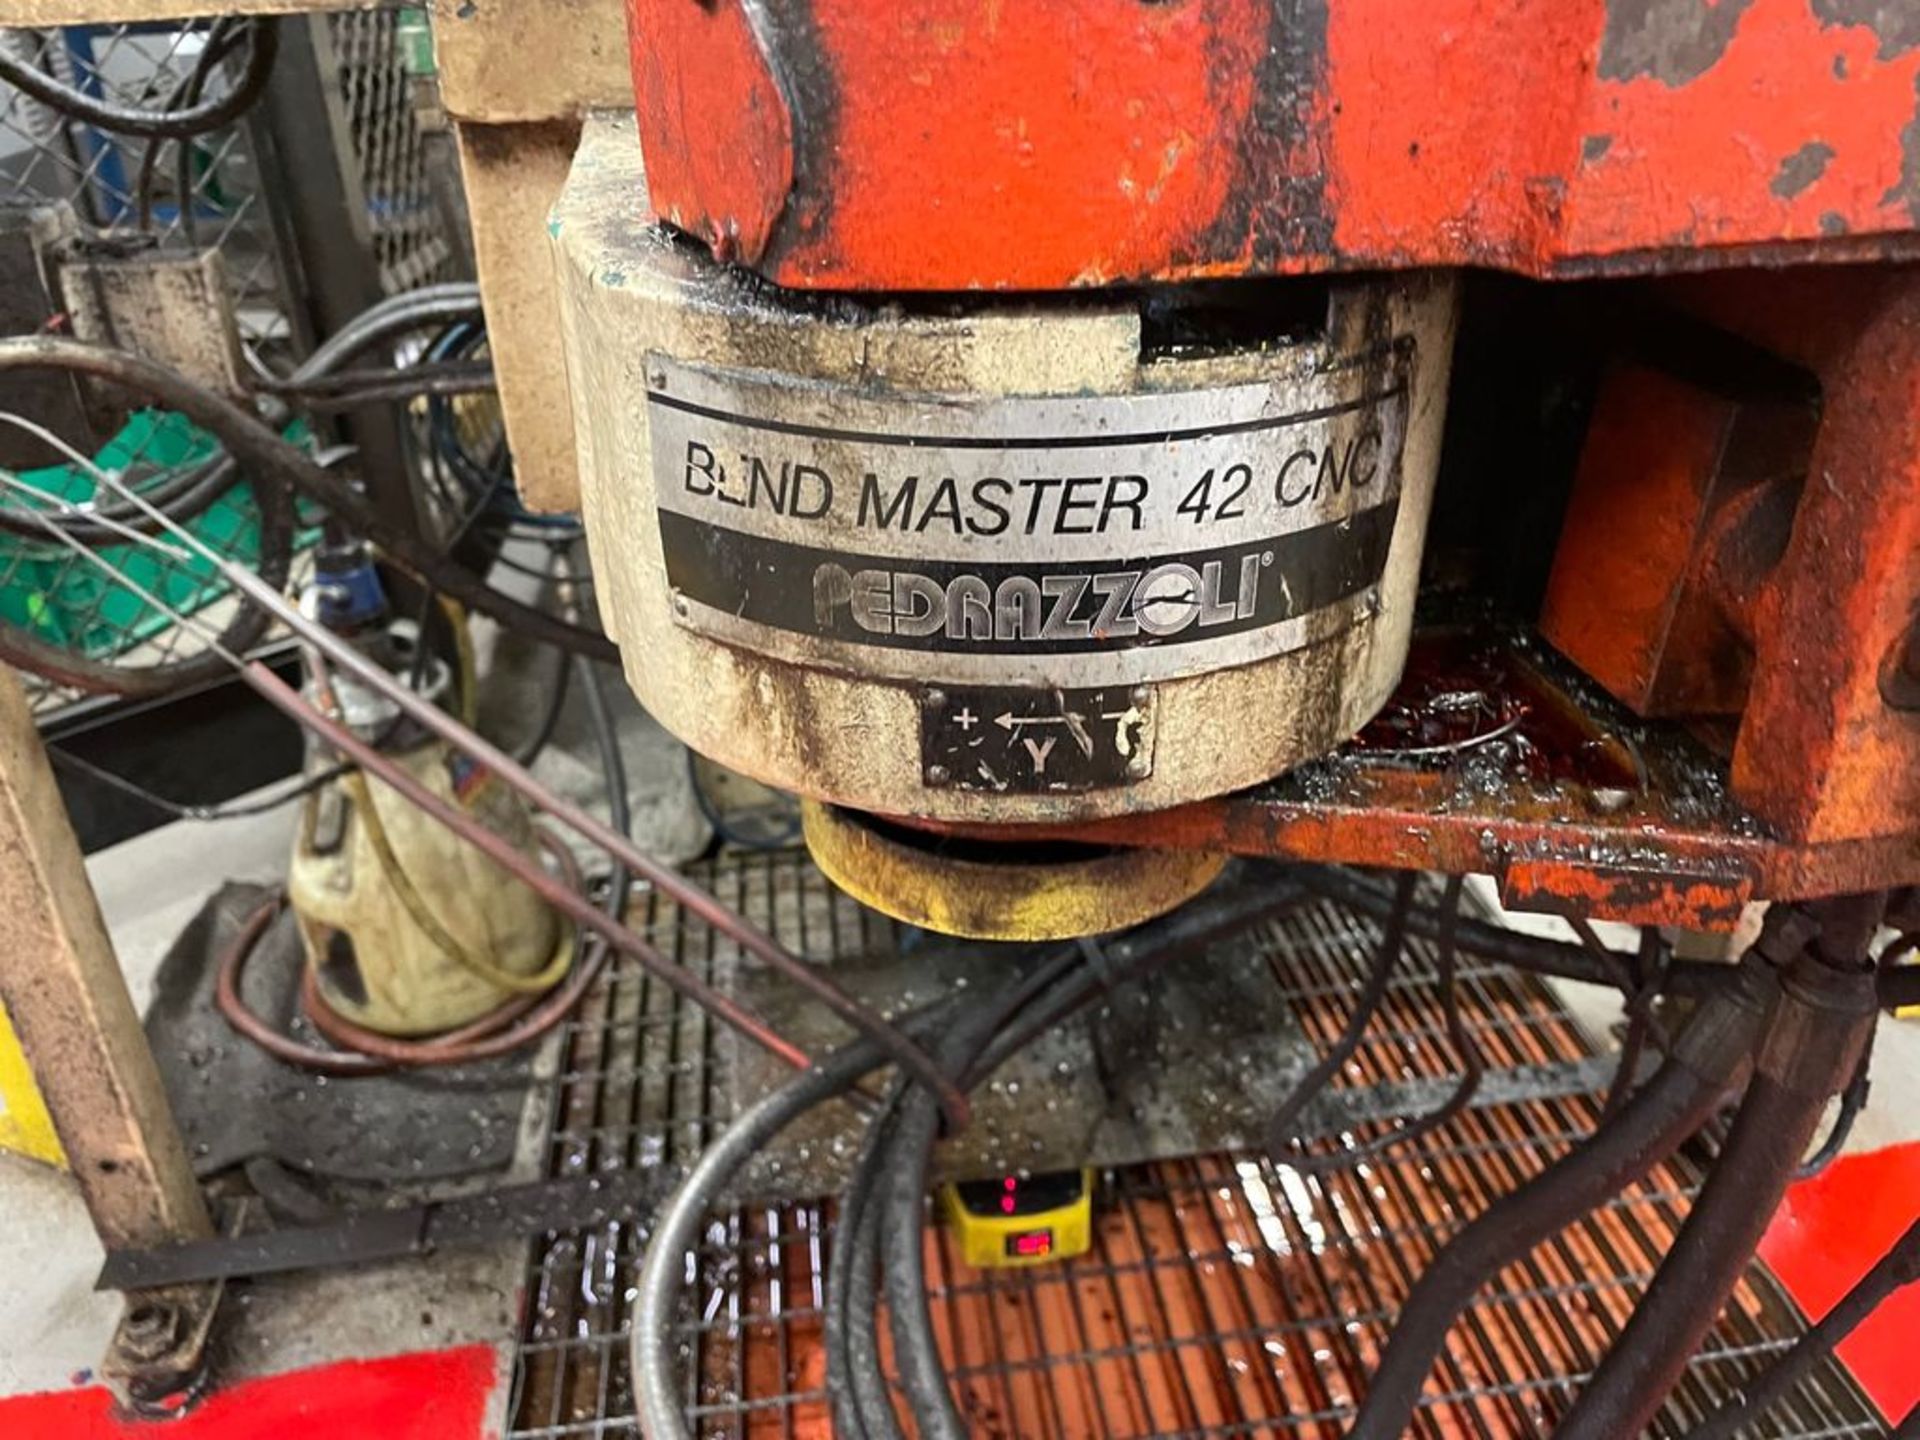 Pedrazzoli Bend Master 42 IMS CNC Tube Bender - Image 10 of 11